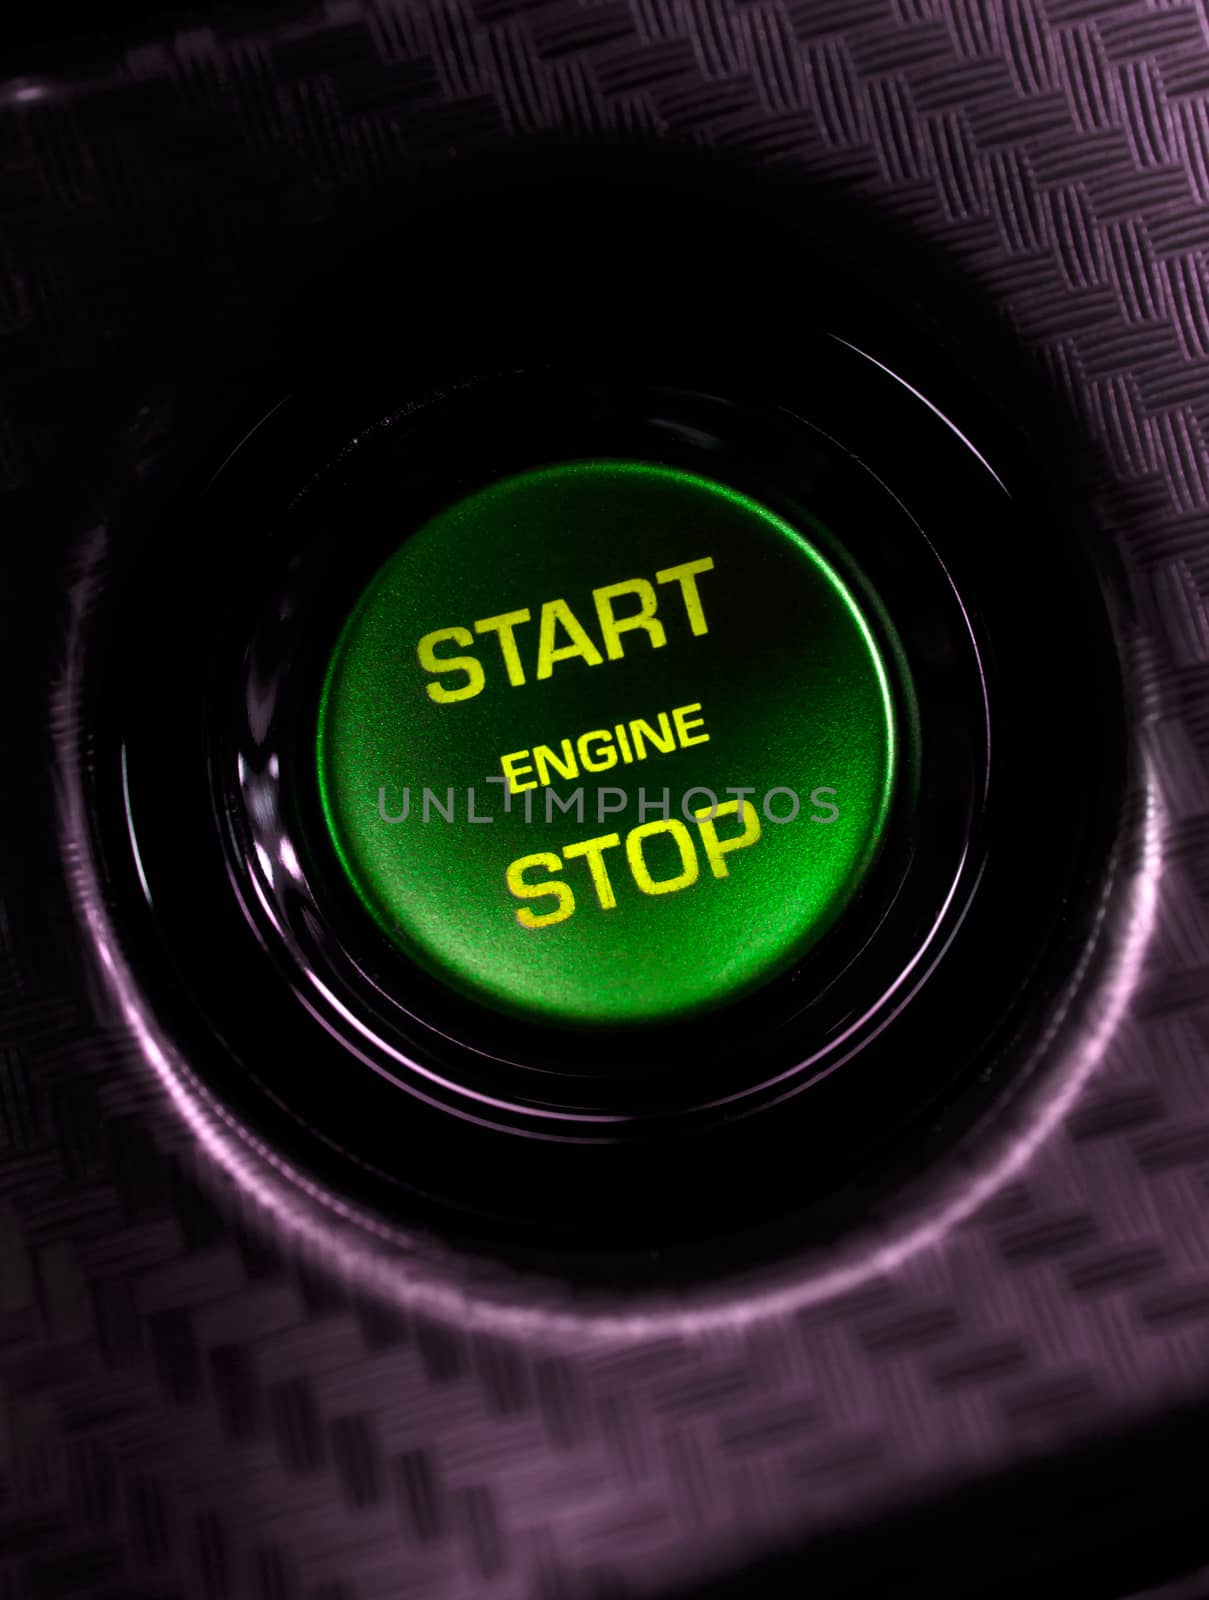 Start stop engine button on a modern car dashboard